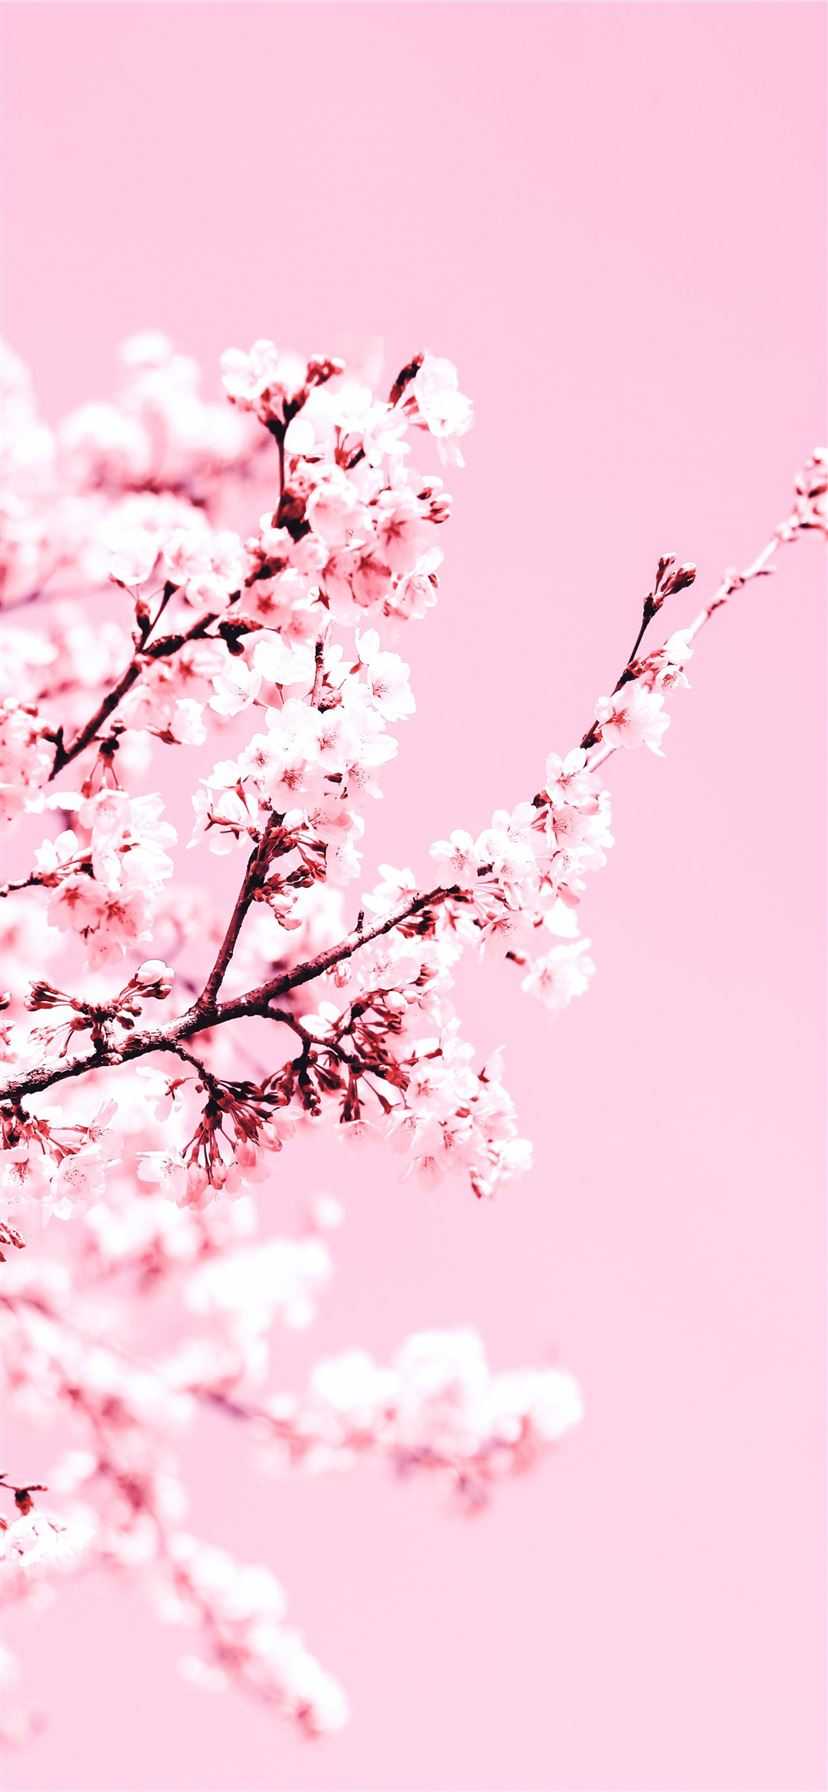 Desktop Wallpaper Anime Sakura Blossom Beautiful Hd Image Picture  Background C5d108